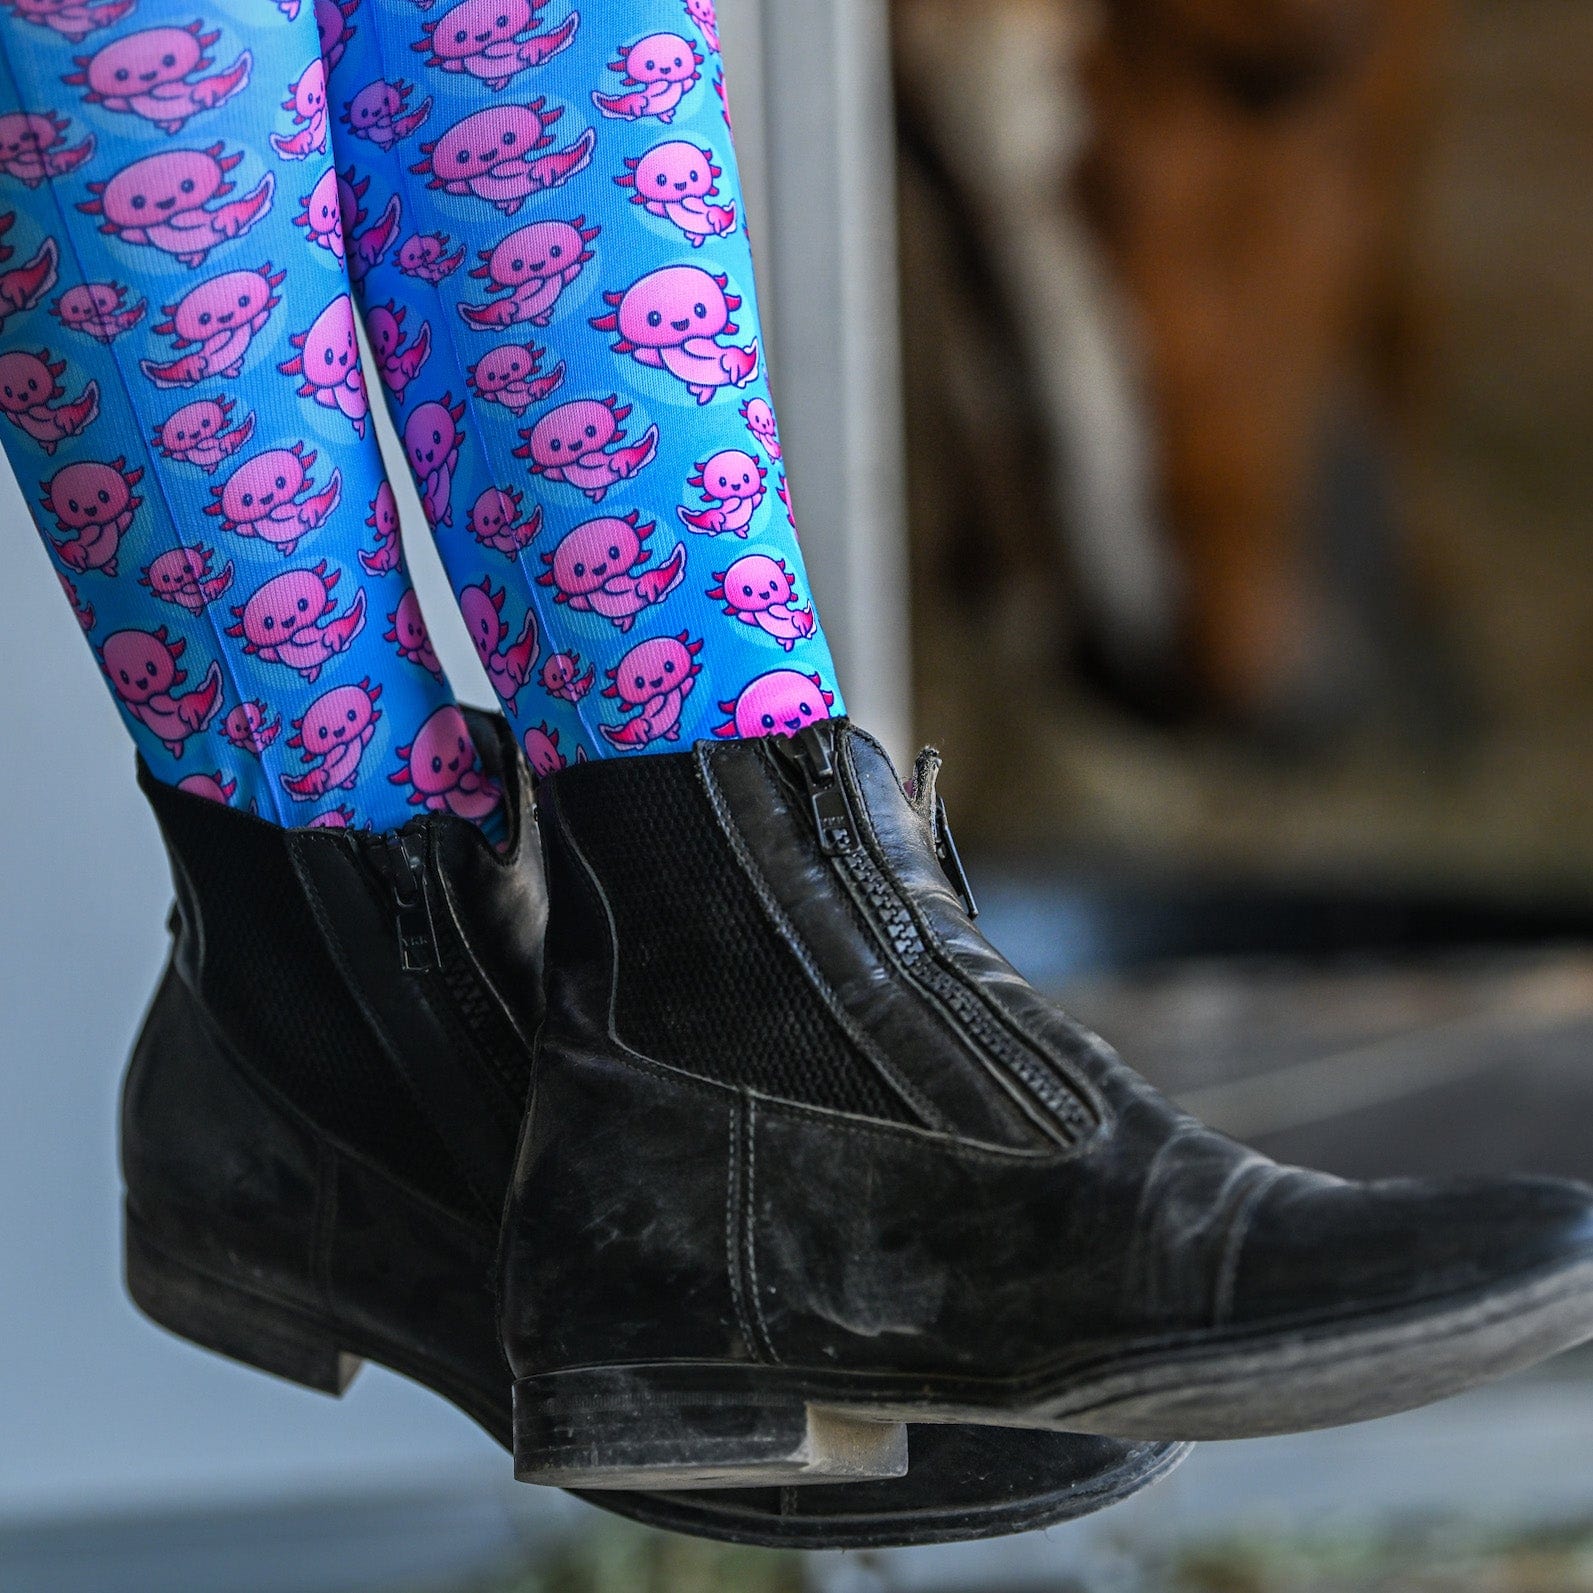 dreamers & schemers Pair & A Spare Axolotl Pair & a Spare equestrian boot socks boot socks thin socks riding socks pattern socks tall socks funny socks knee high socks horse socks horse show socks